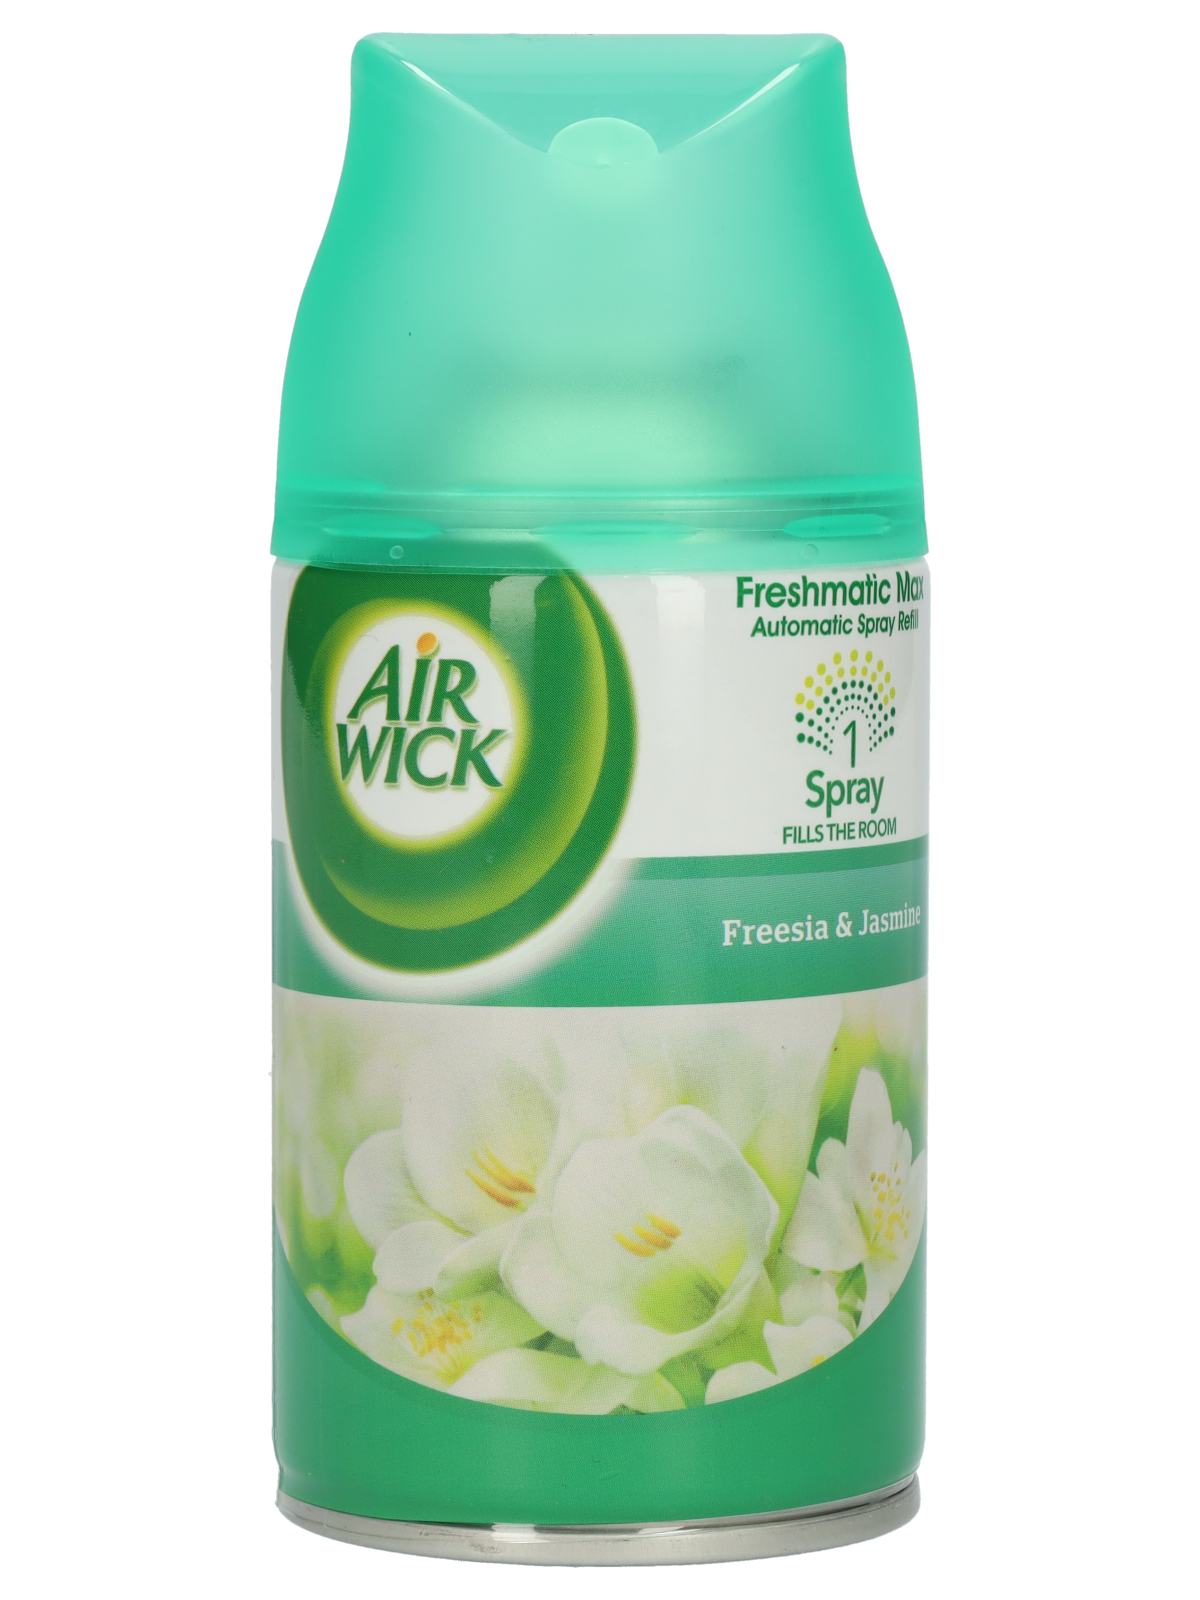 Air Wick Desodorisant Maison Diffuseur Freshmatic + 2 Recharges